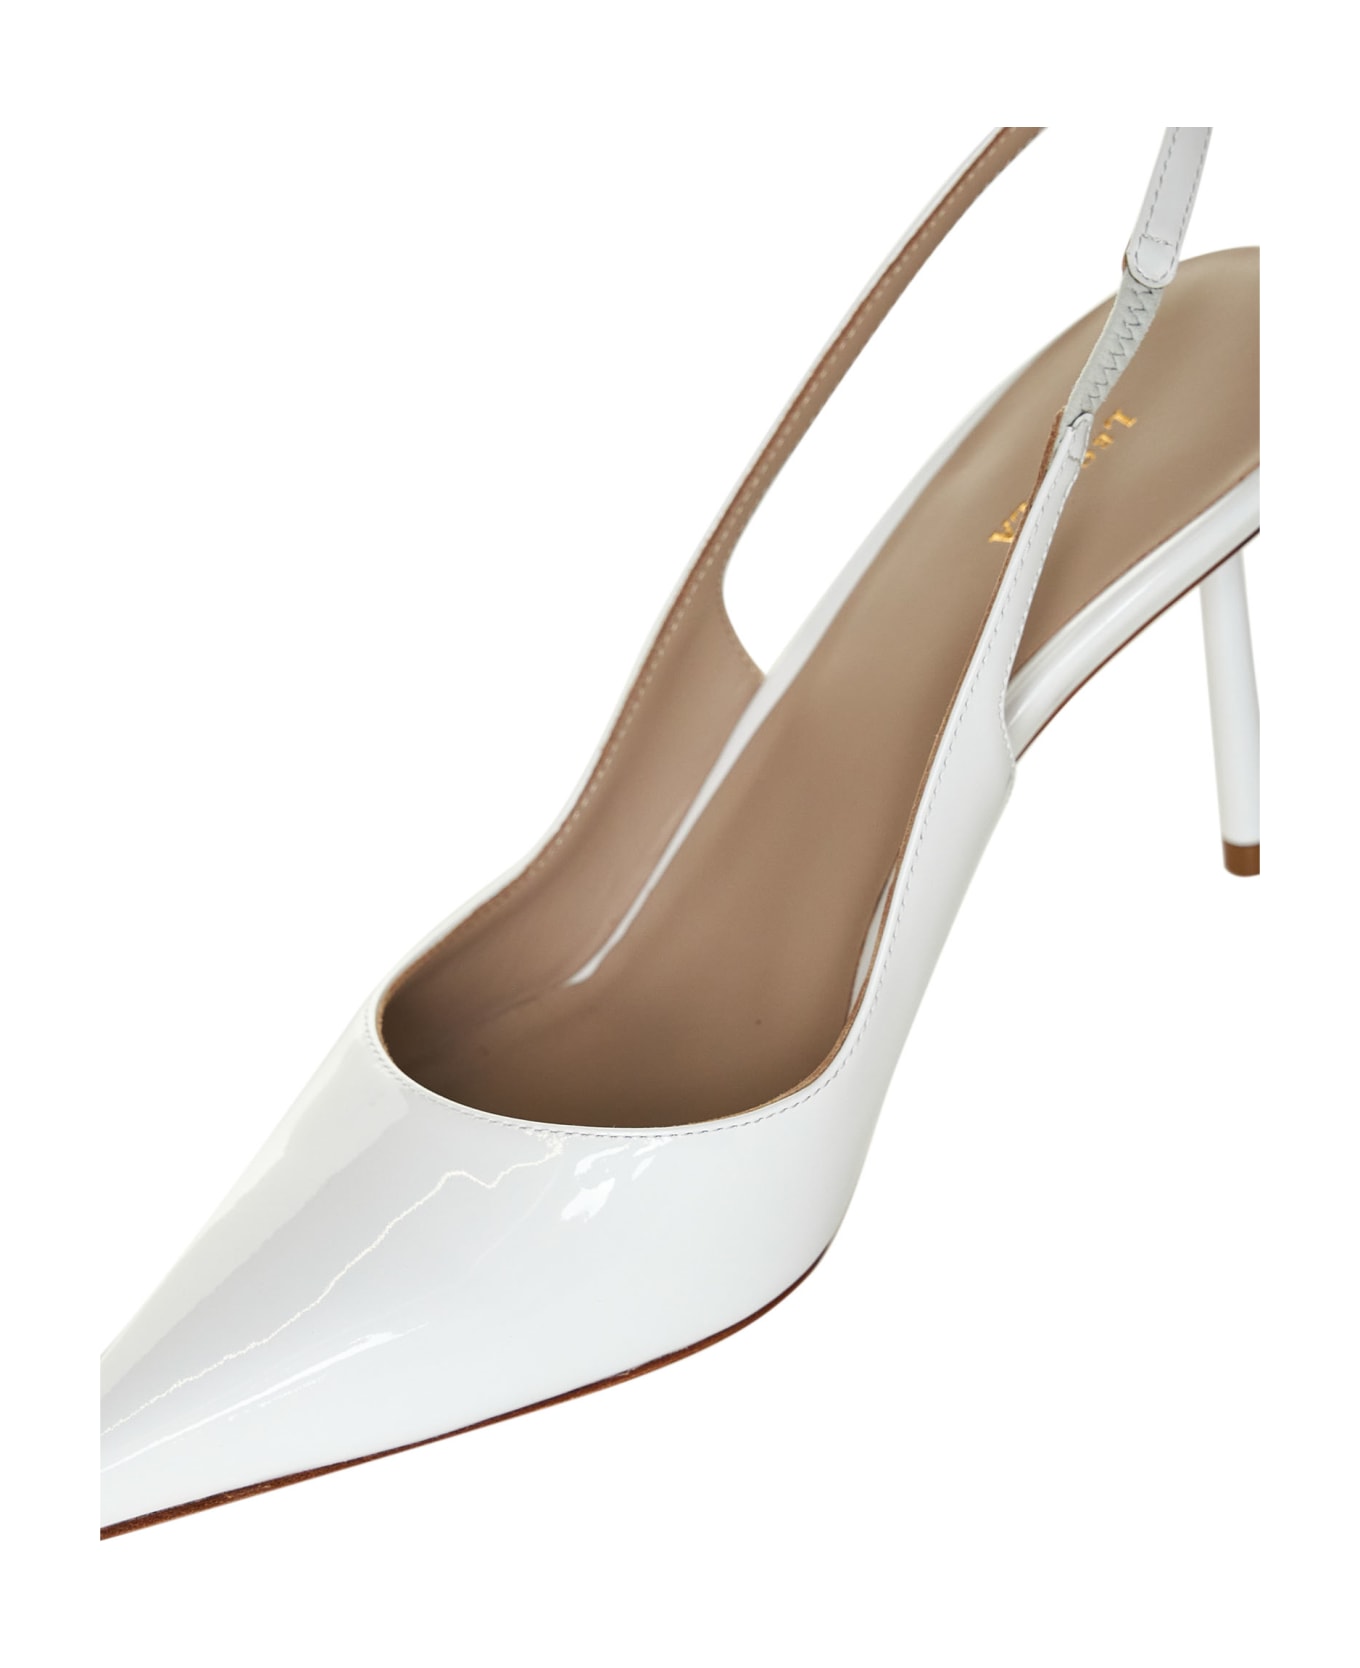 Le Silla High-heeled shoe - Carta ハイヒール